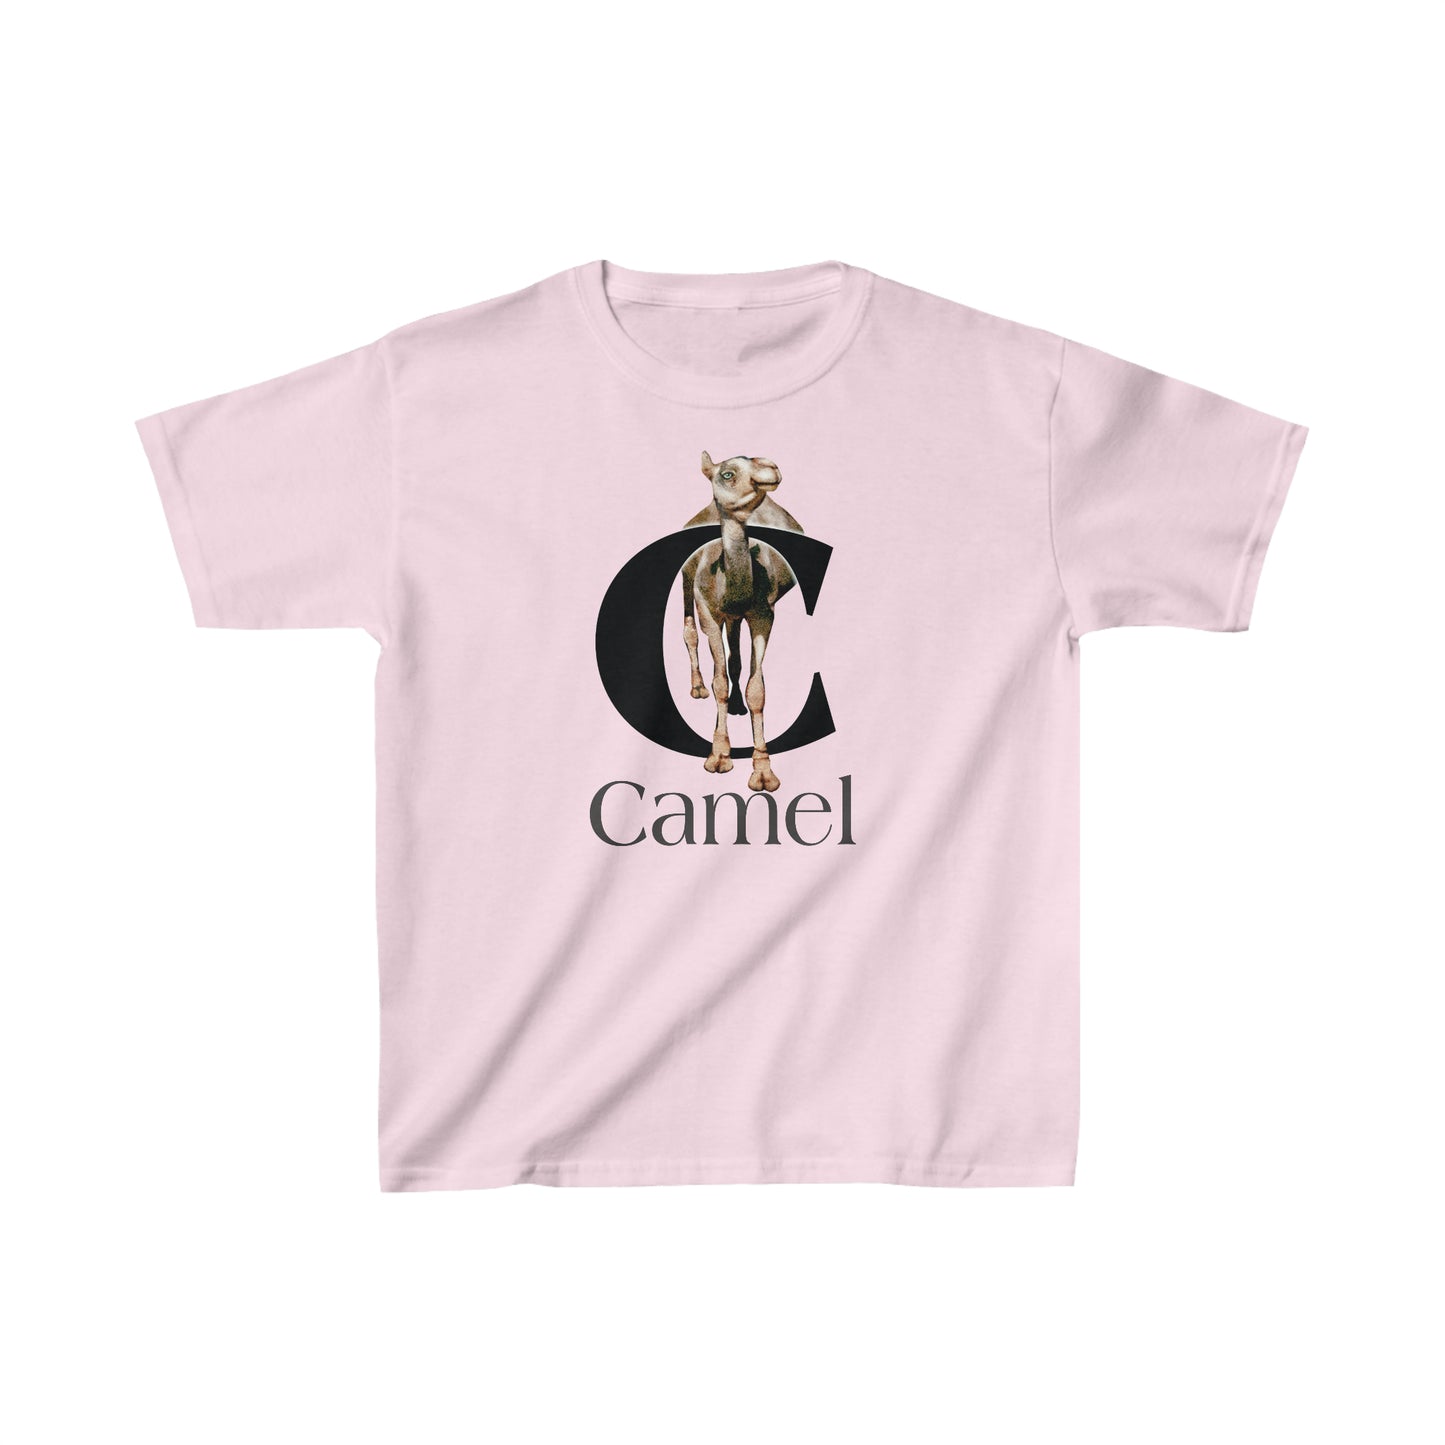 C is for Camel Youth t-shirt, Camel Drawing T-Shirt, Camel Illustration, Camel lover shirt, animal t-shirt, animal alphabet T, animal letters Tee